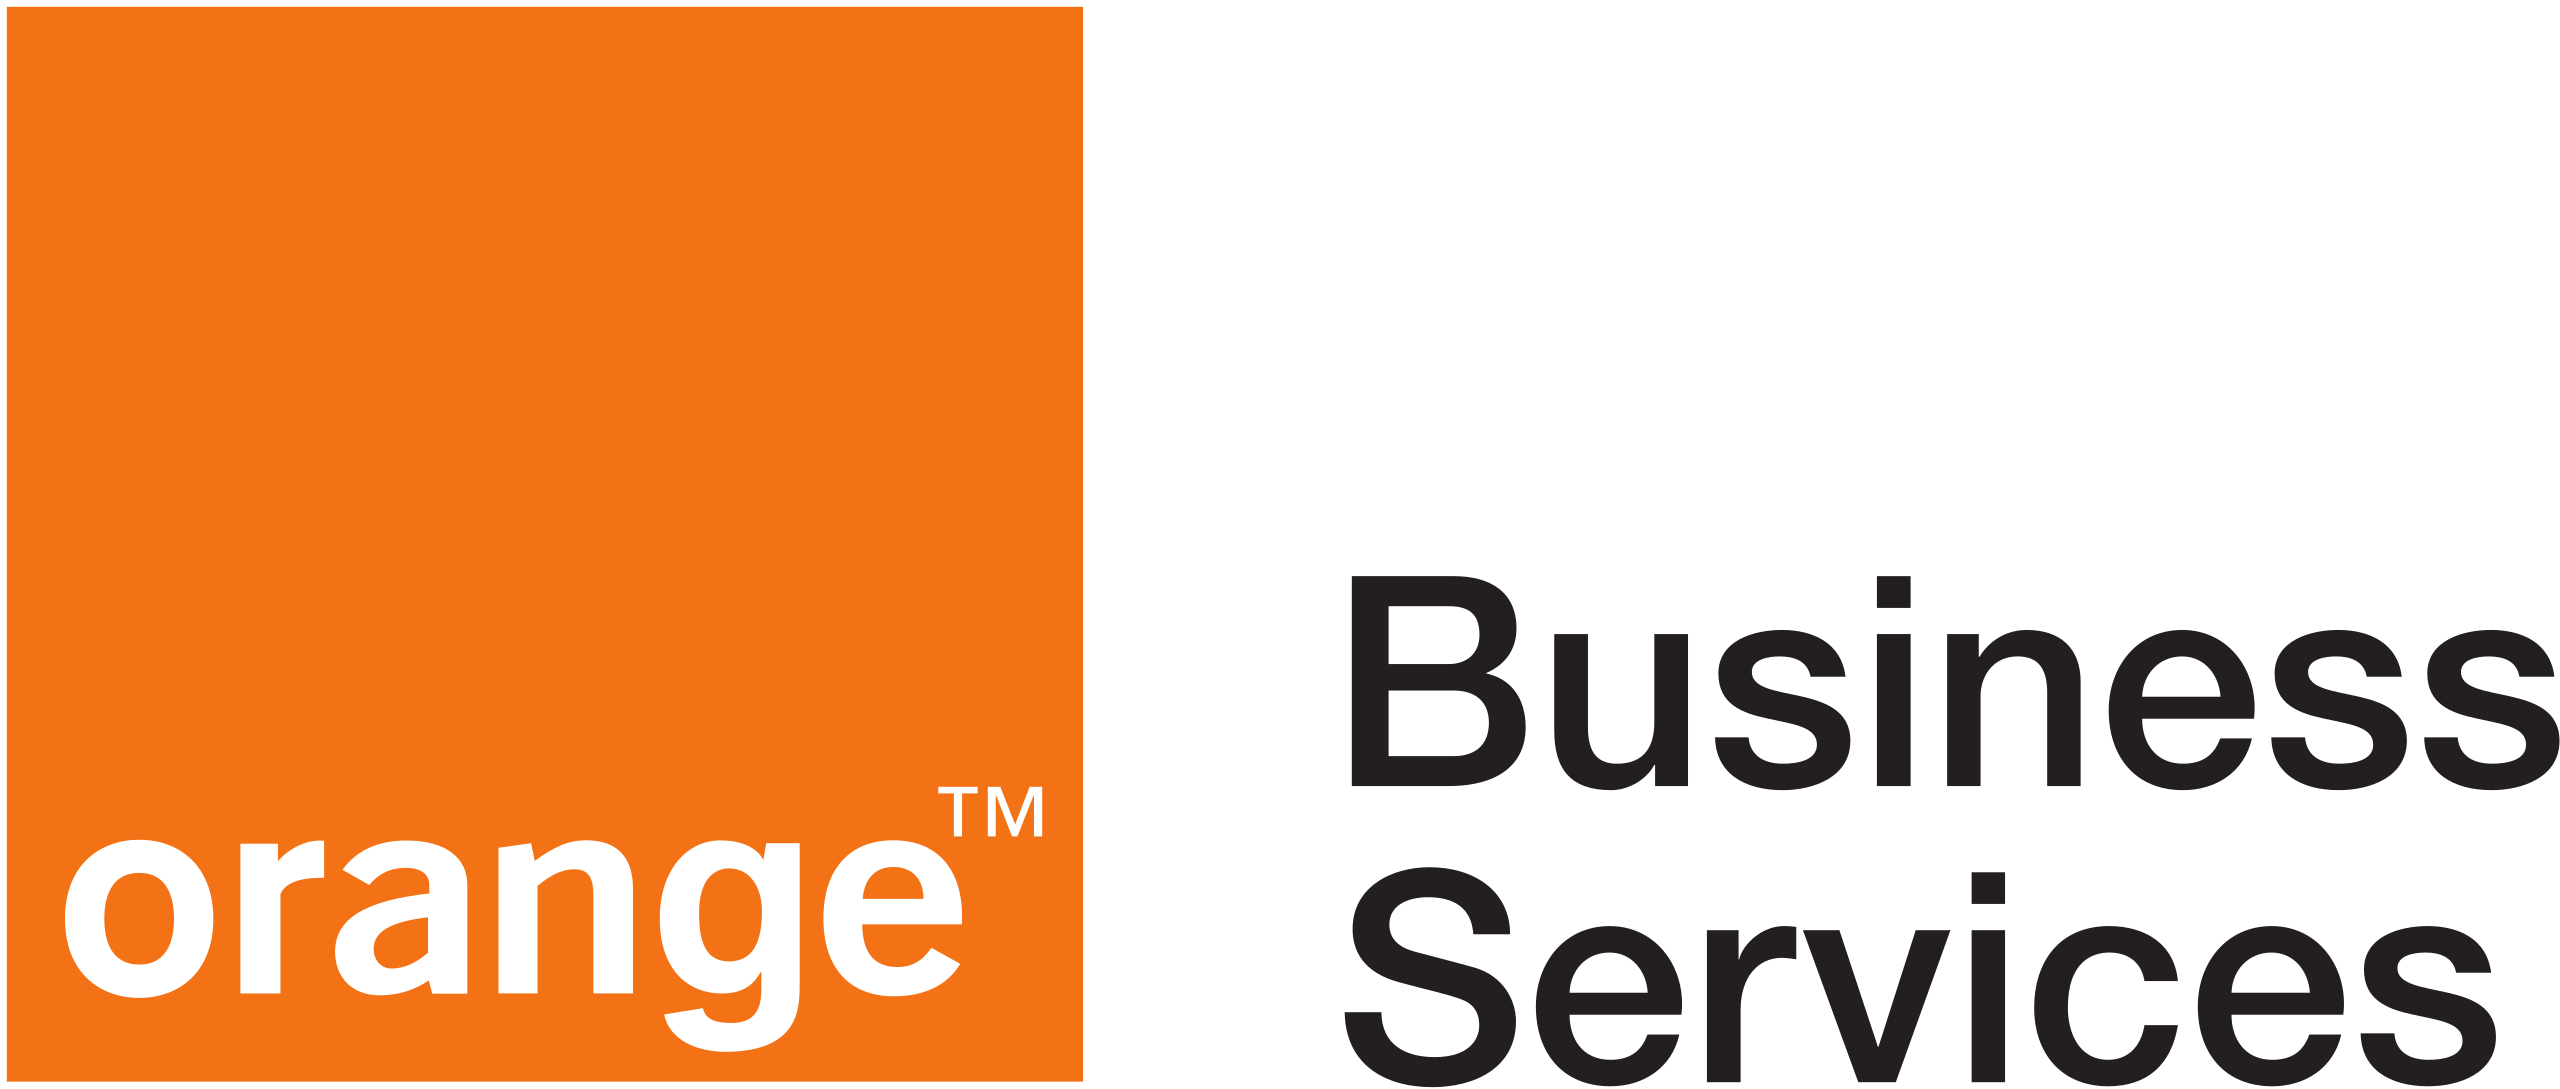 Company logo and a brief description of services.